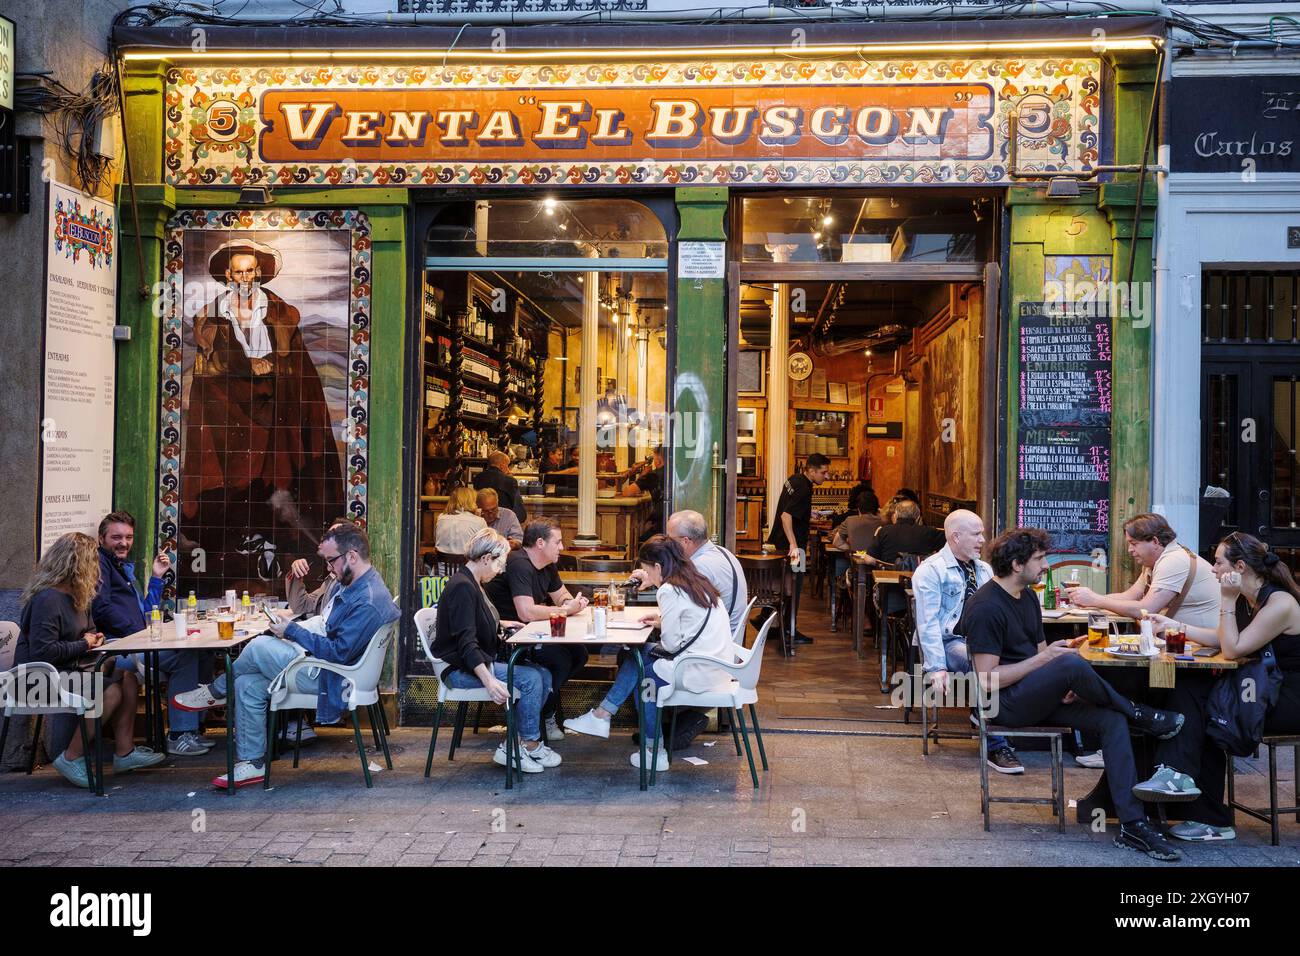 Venta El Buscon Tapas bar and restaurant  near the Plaza de Santa Ana, in the centre of Madrid. Spain Stock Photo